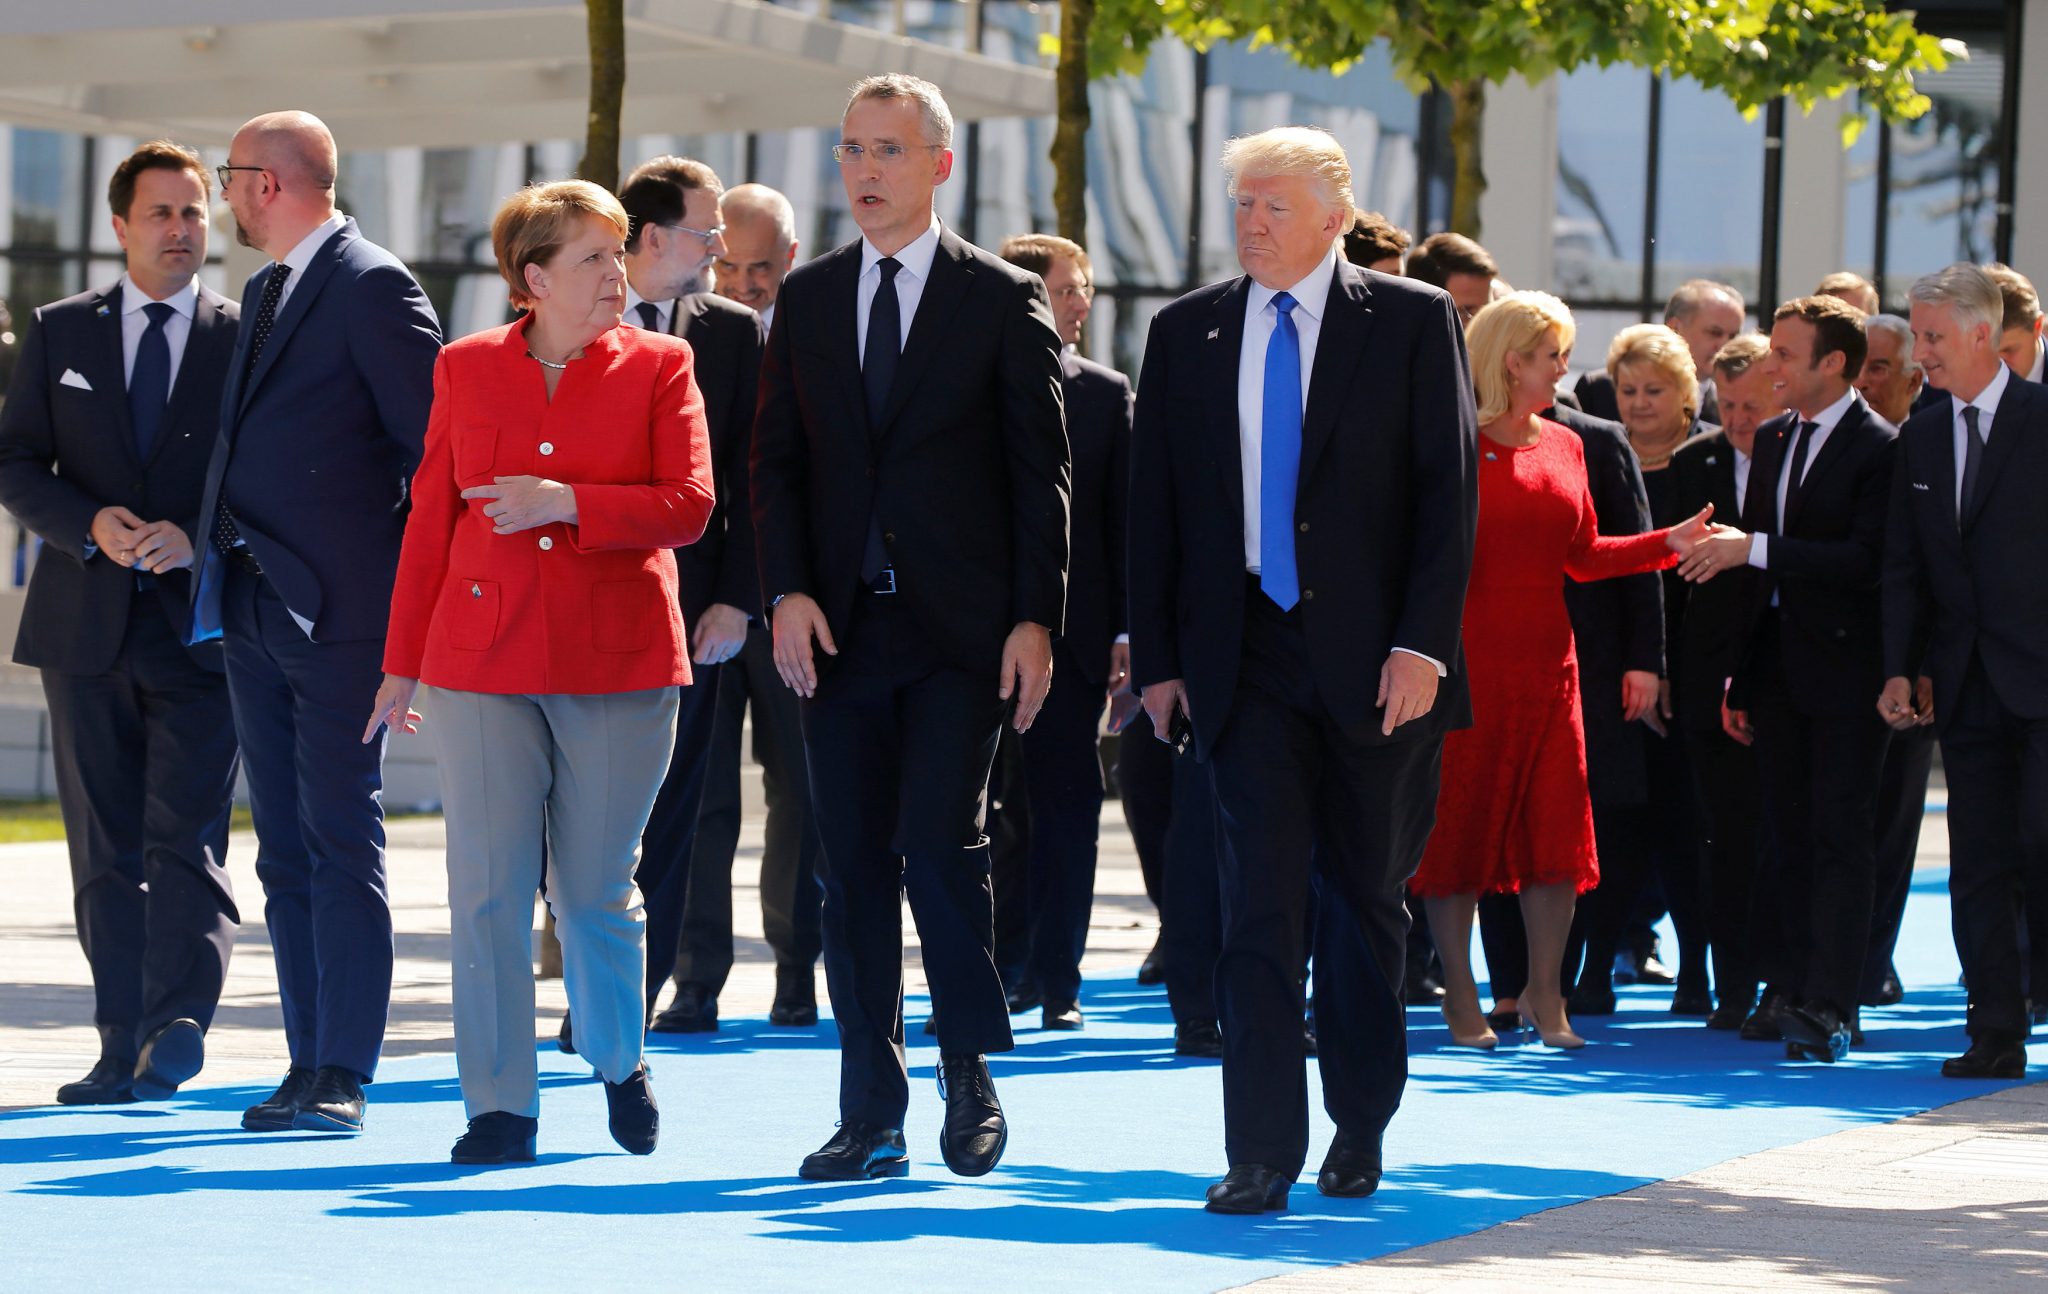 Monday Talk with Michael Carpenter on NATO and the U.S. Under Trump